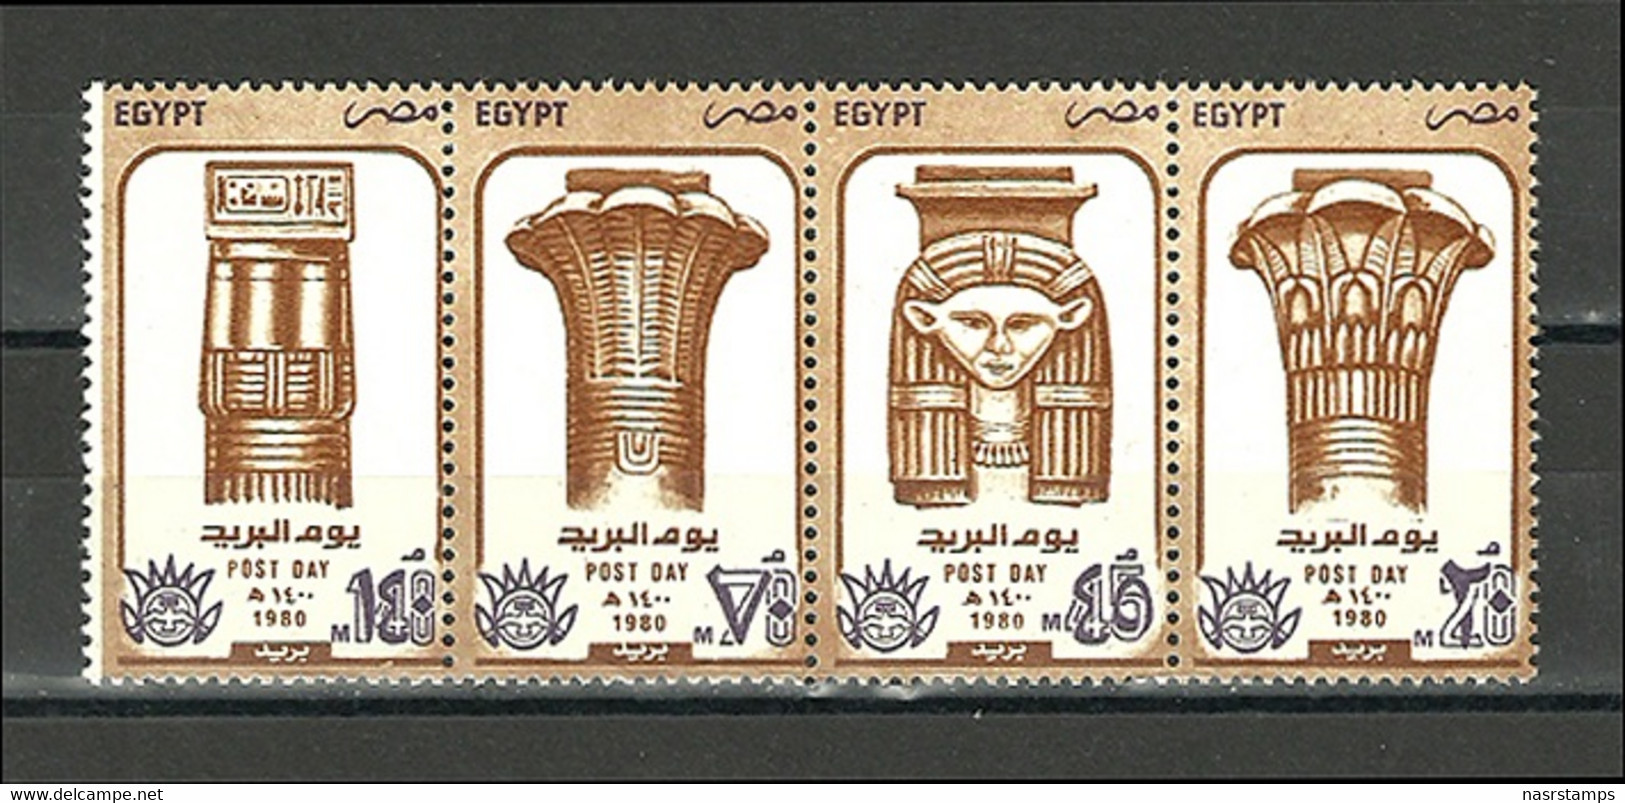 Egypt - 1980 - ( Post Day - Pharaonic Capital ) - Strip Of 4 - MNH (**) - Egyptology